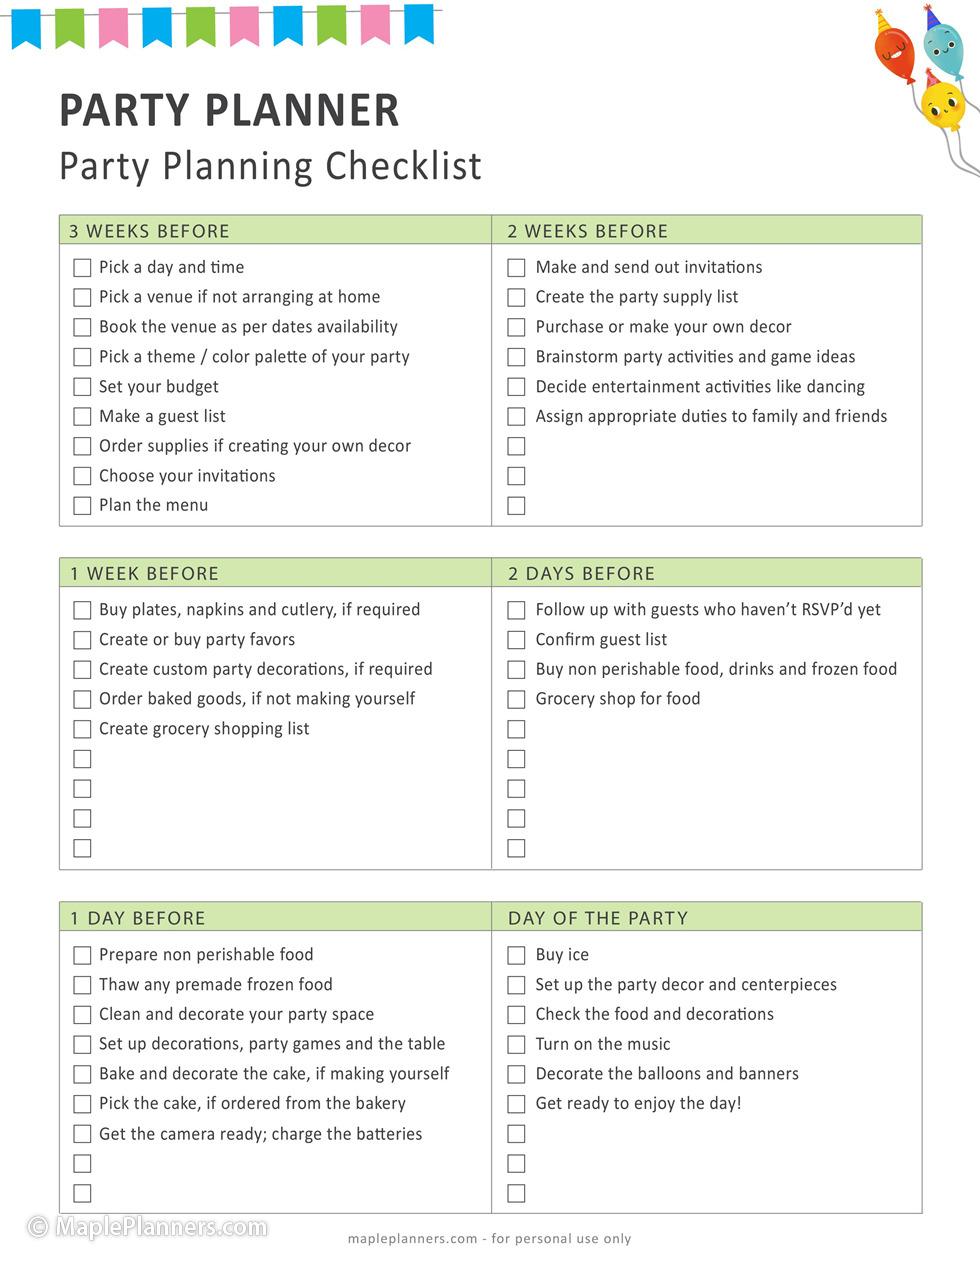 Party Planning Checklist Prefilled